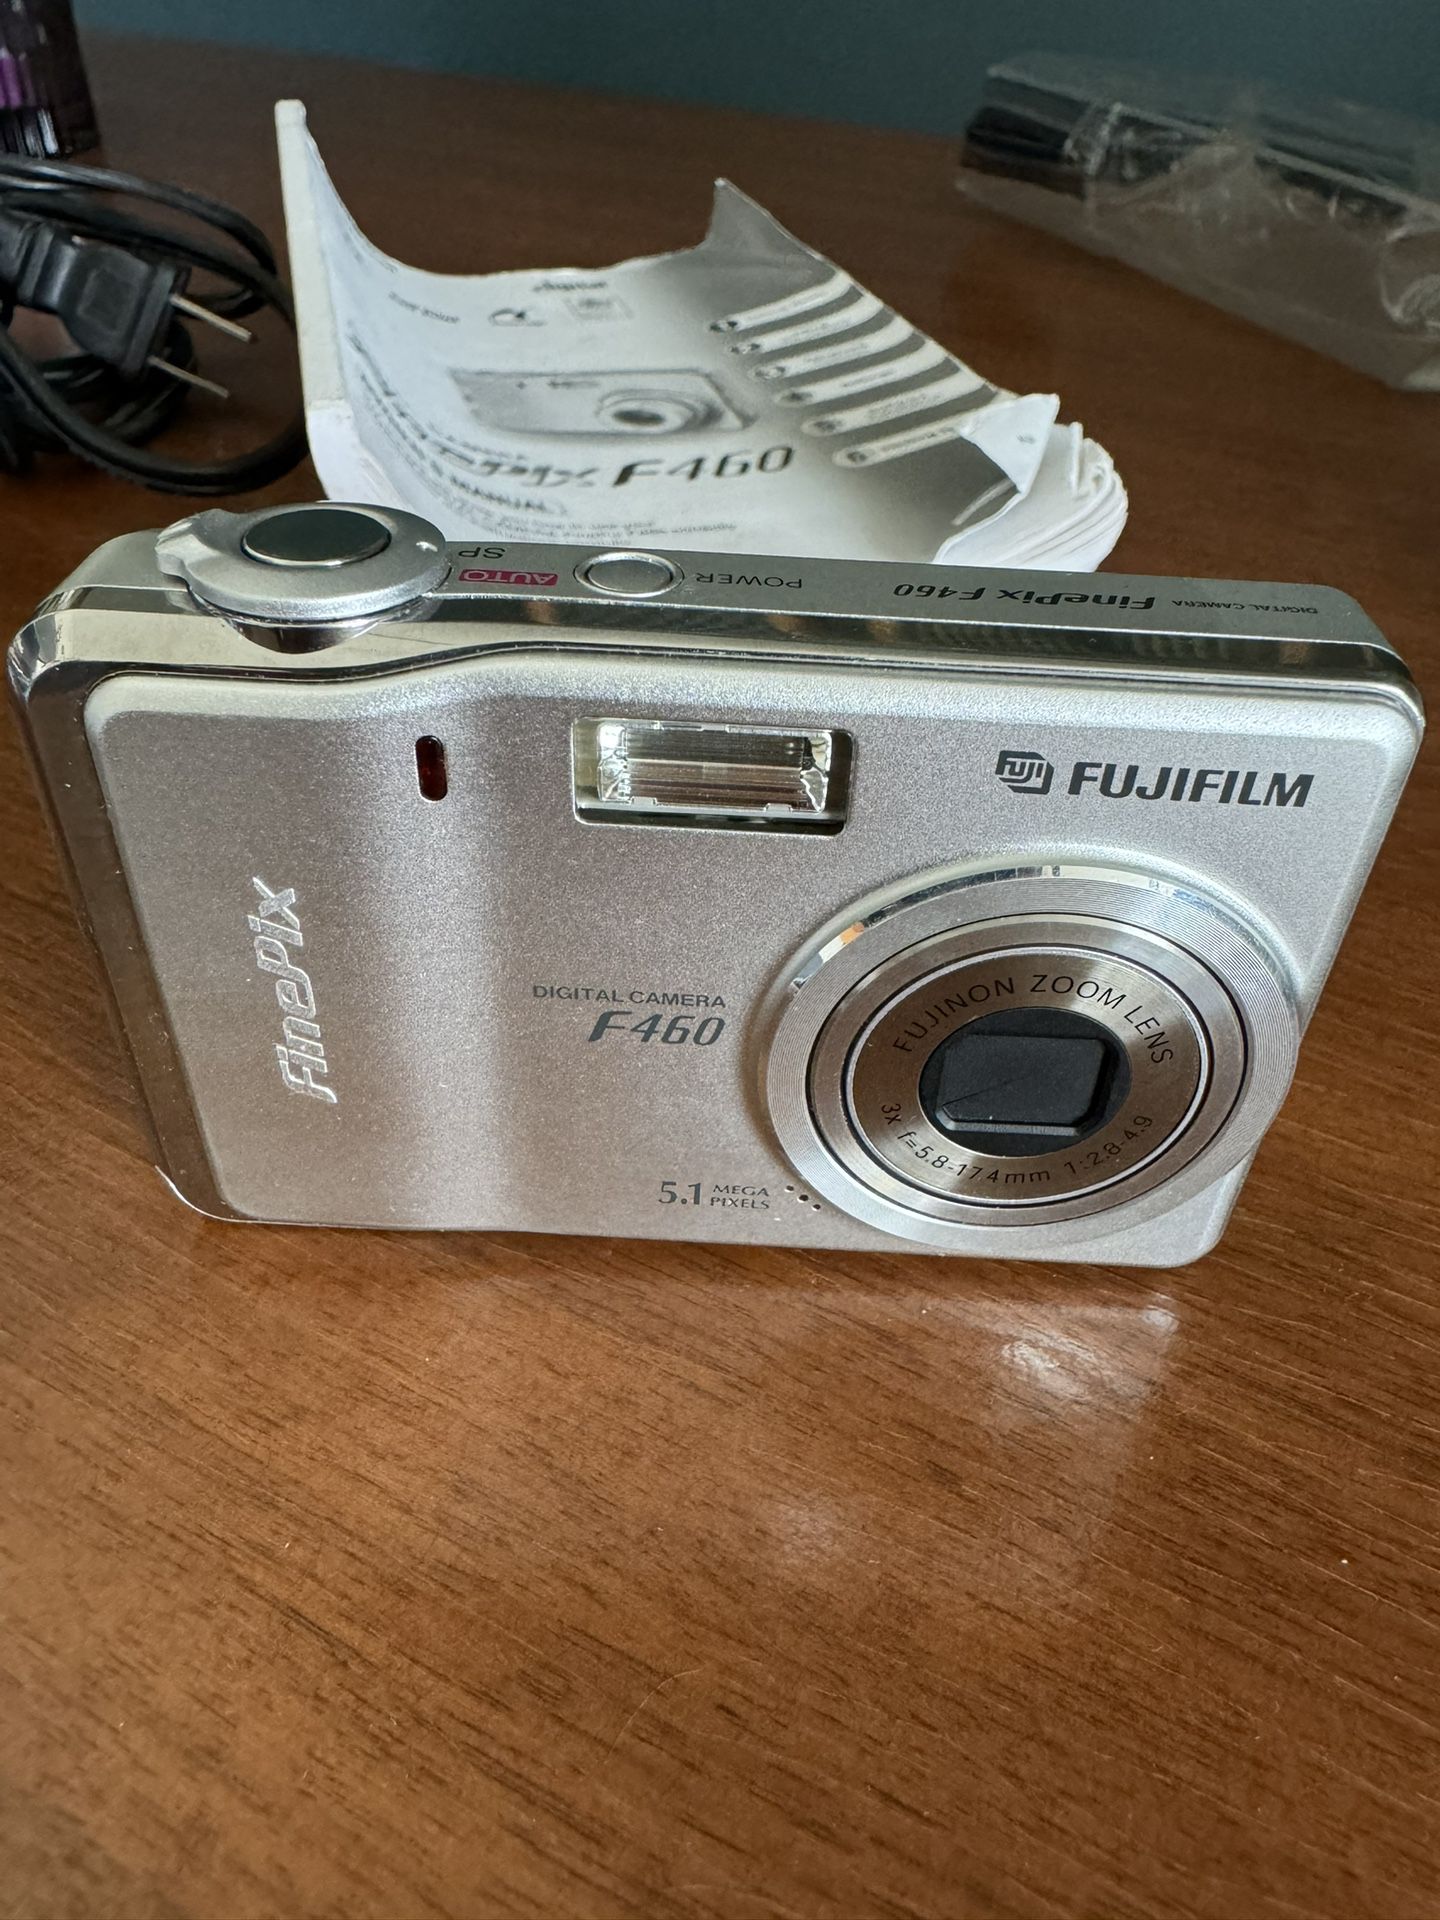 Digital Camera Fujifilm F460